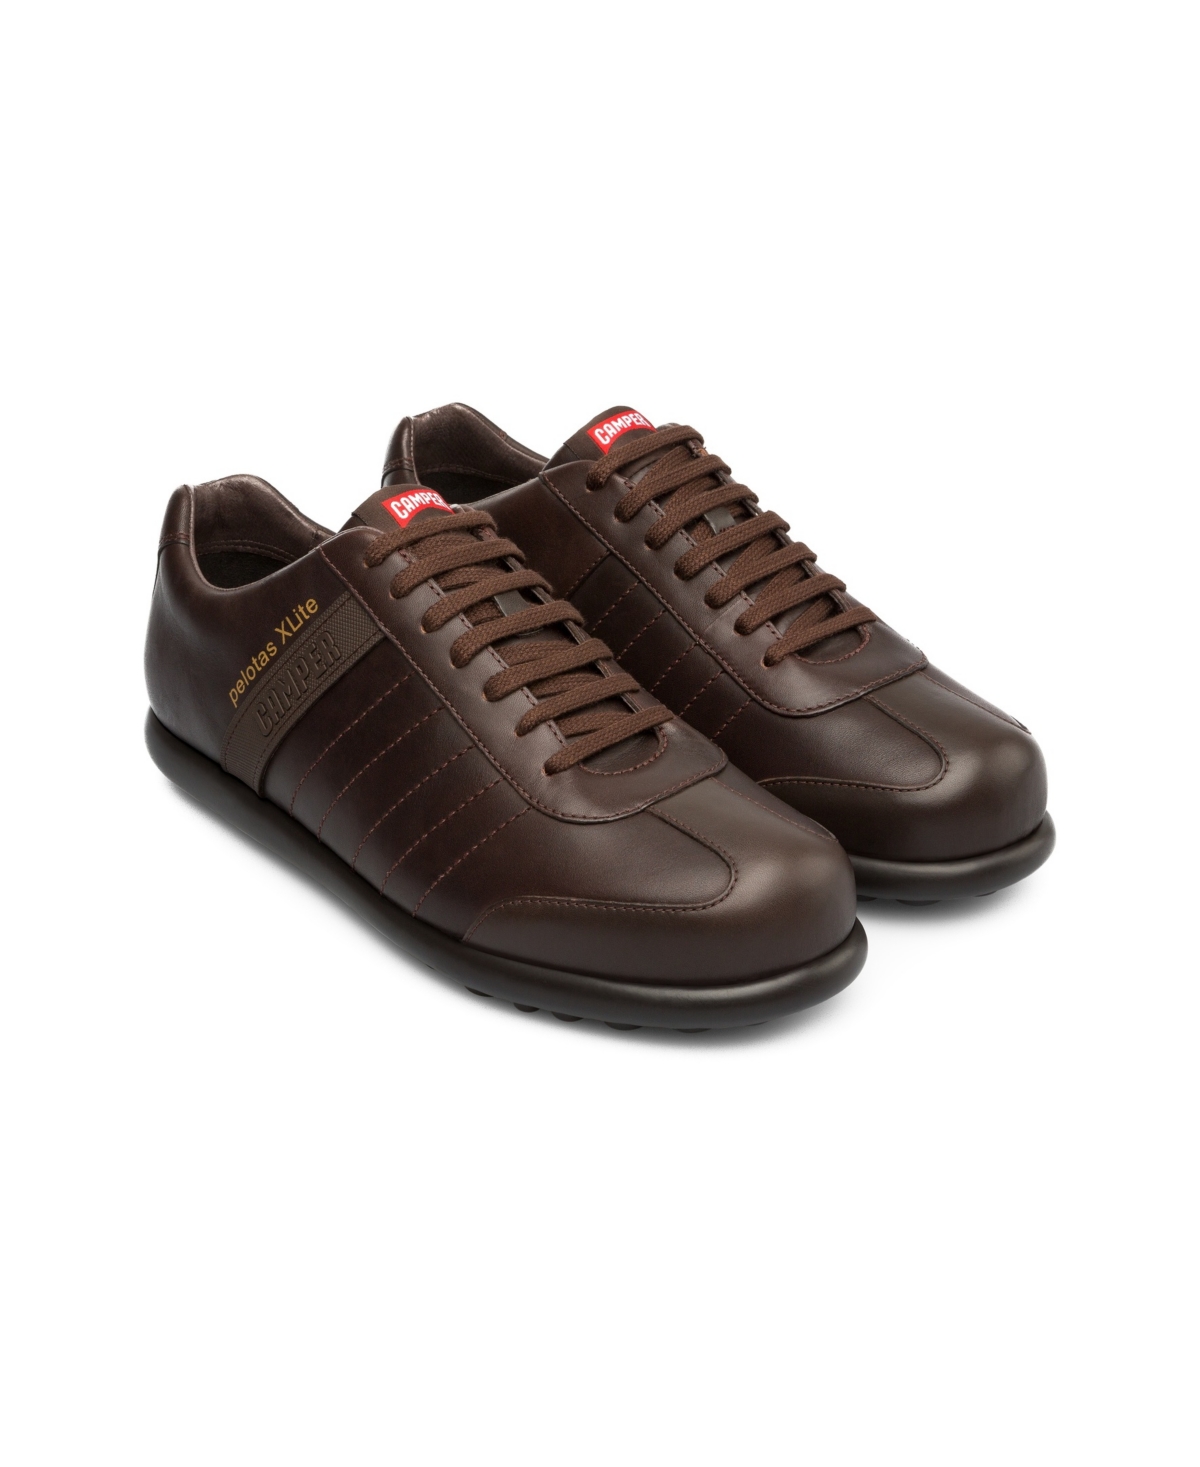 Men's Pelotas Xl Sneakers - Dark Brown